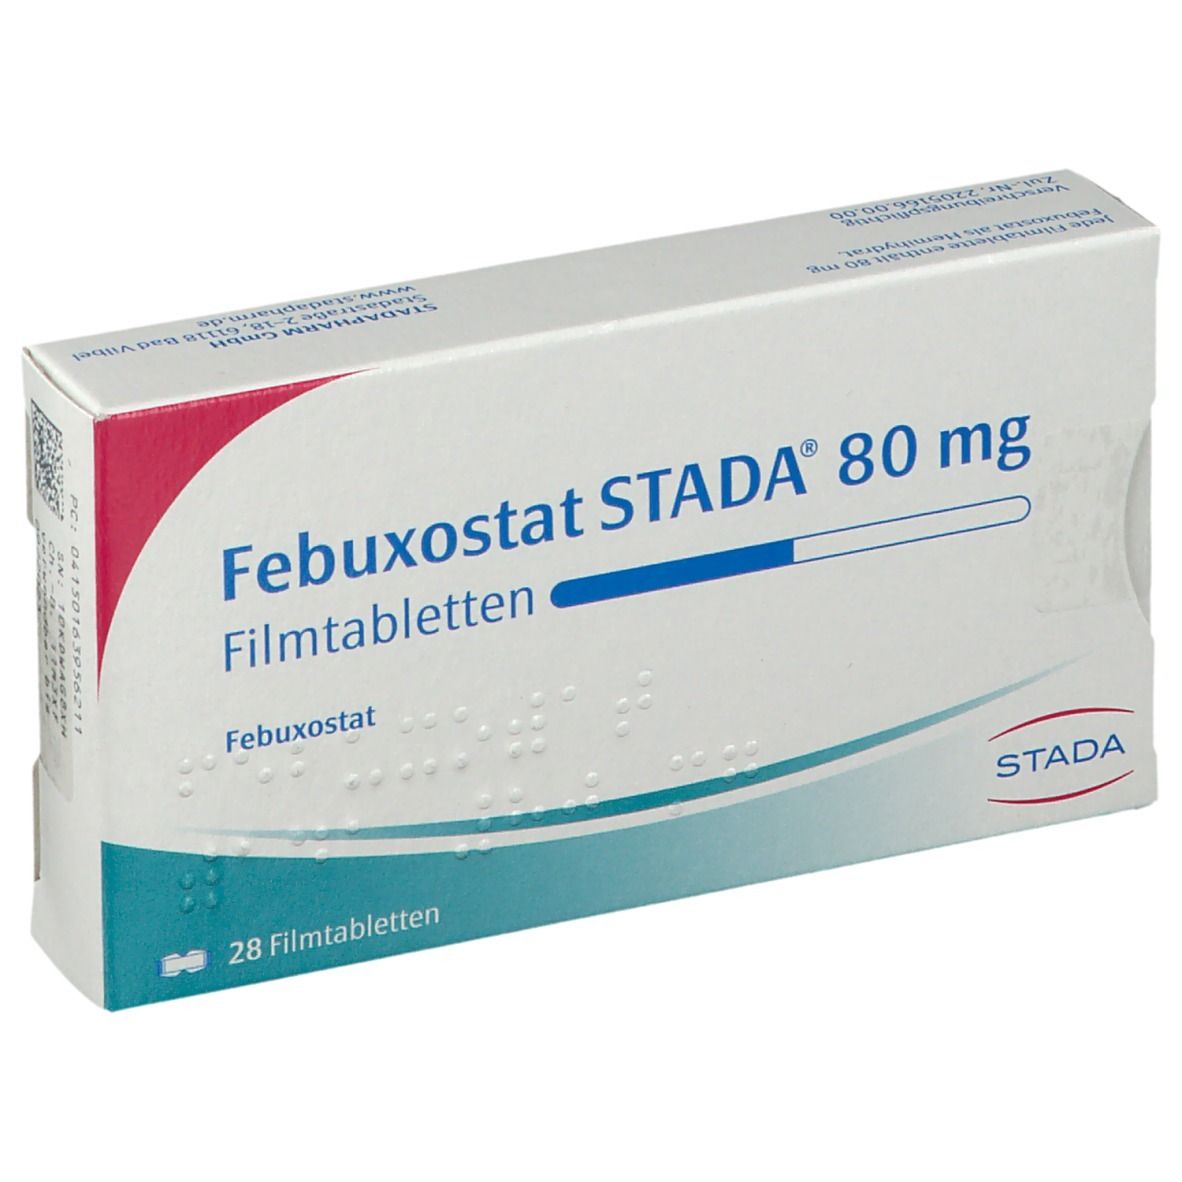 Febuxostat STADA® 80 mg